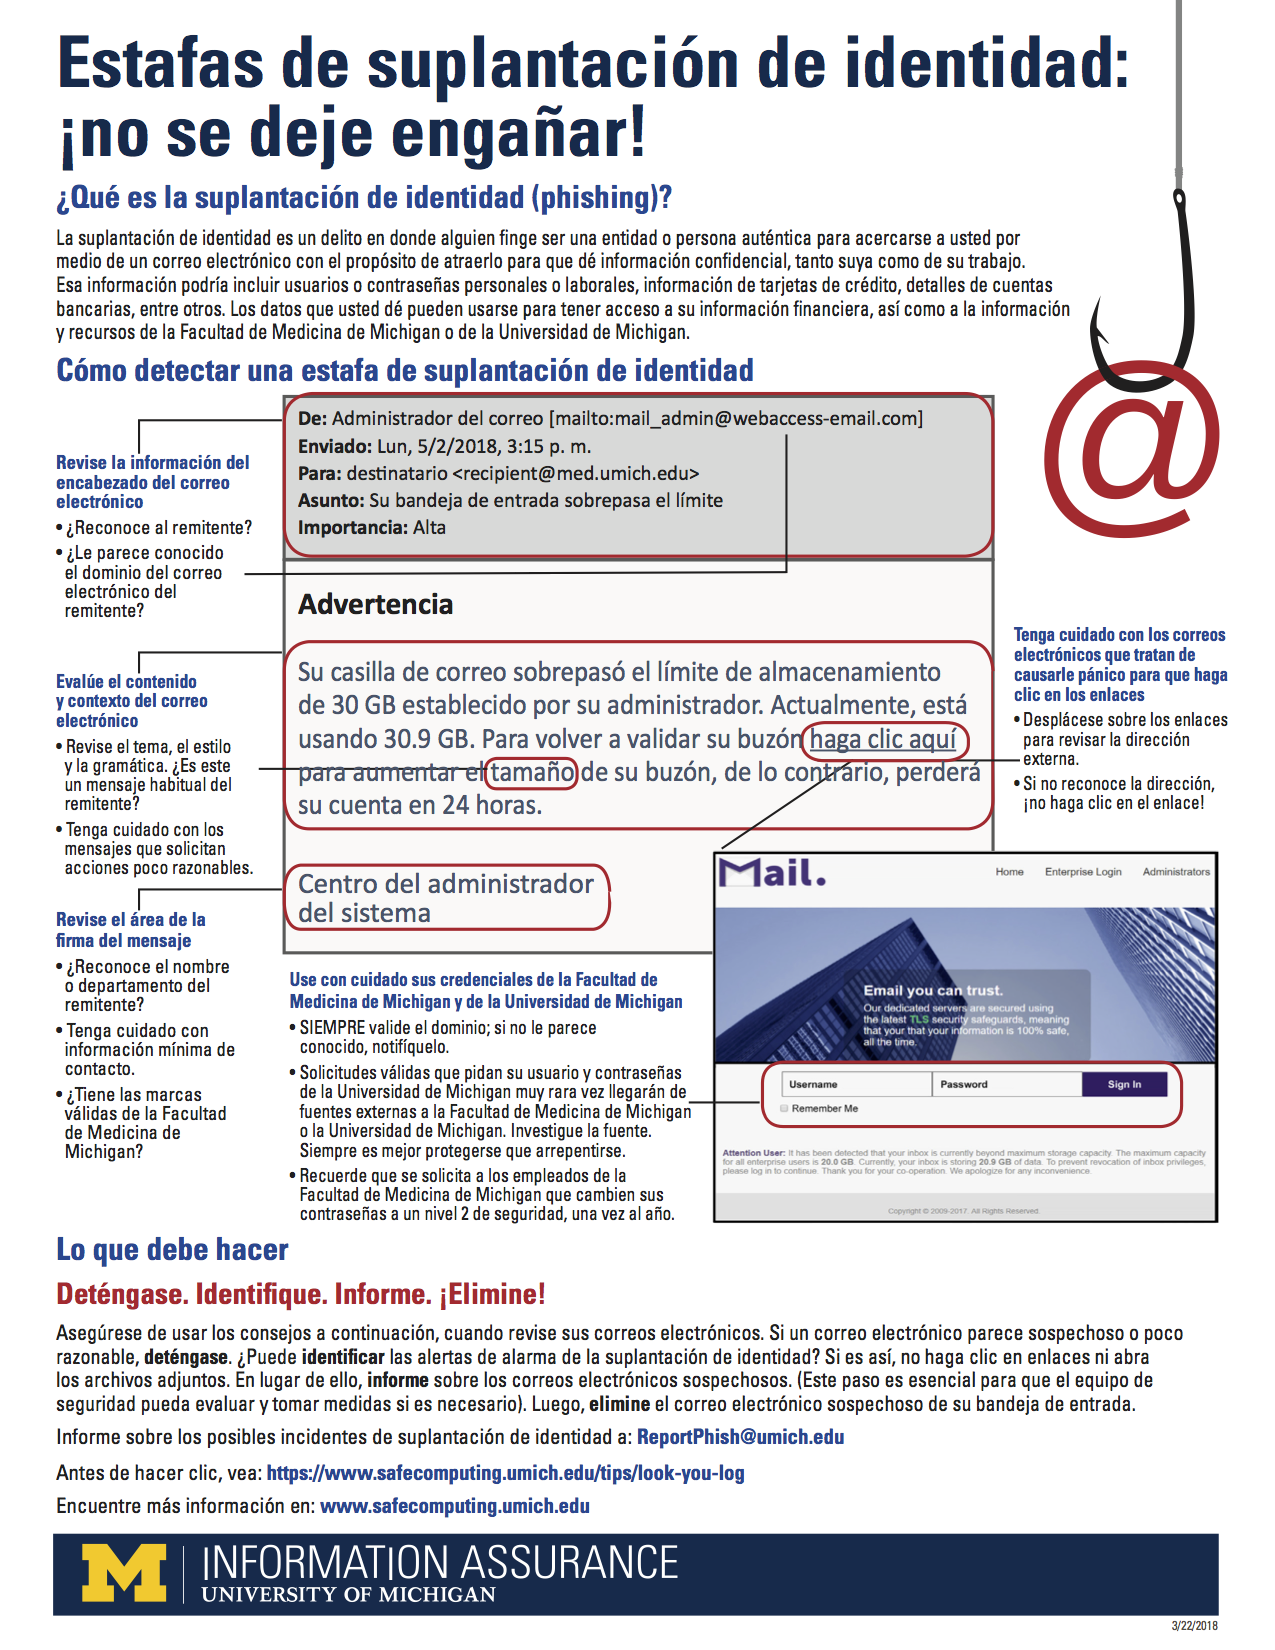 Image of the anti-phishing tip sheet in Spanish.